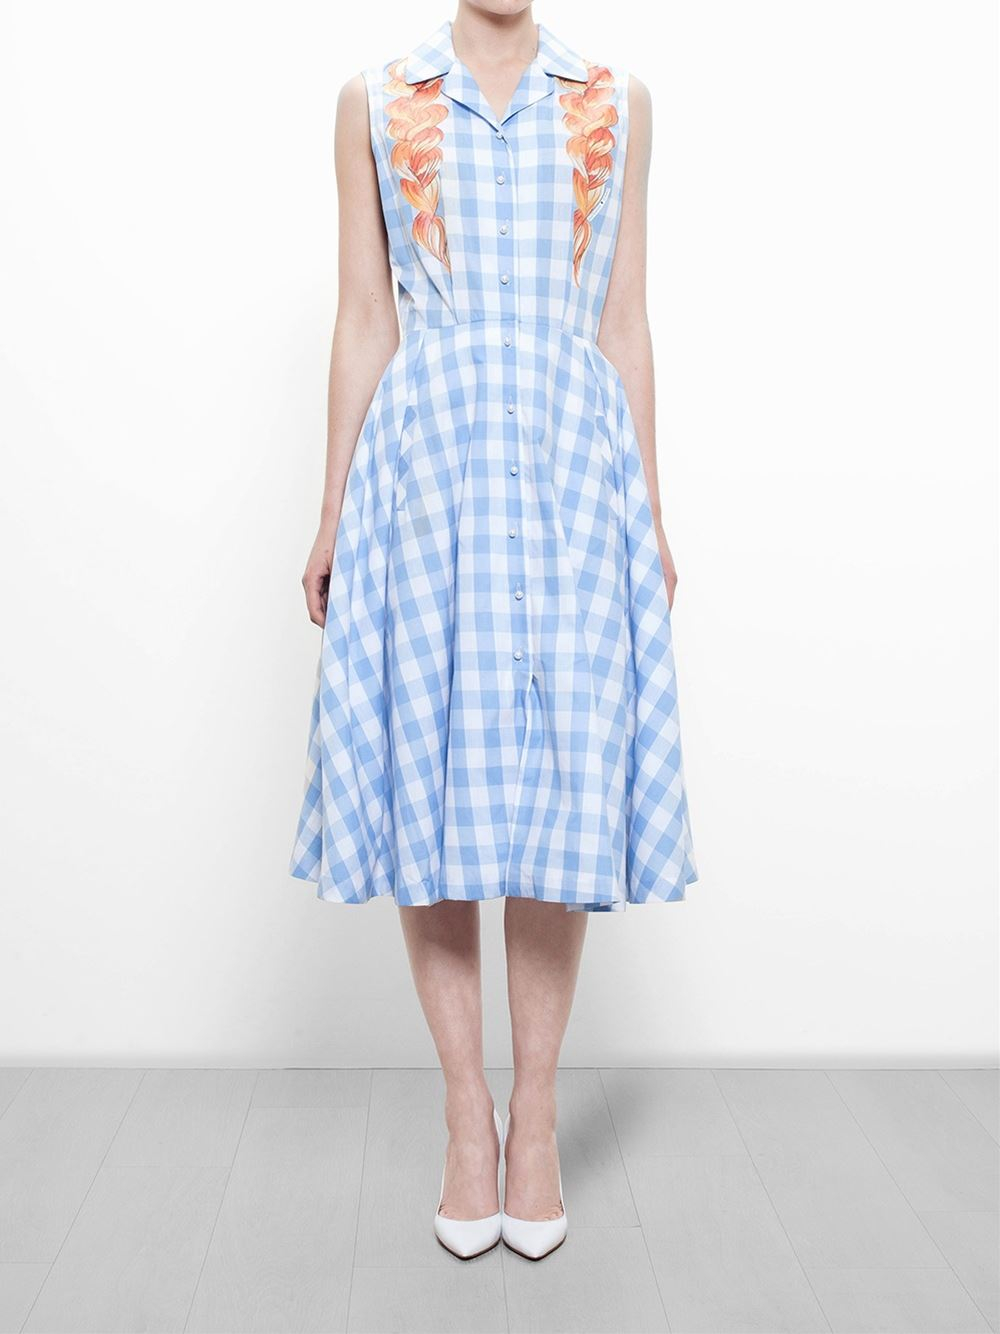 Lyst - Natasha Zinko Gingham Dress With Pigtail Print in Blue